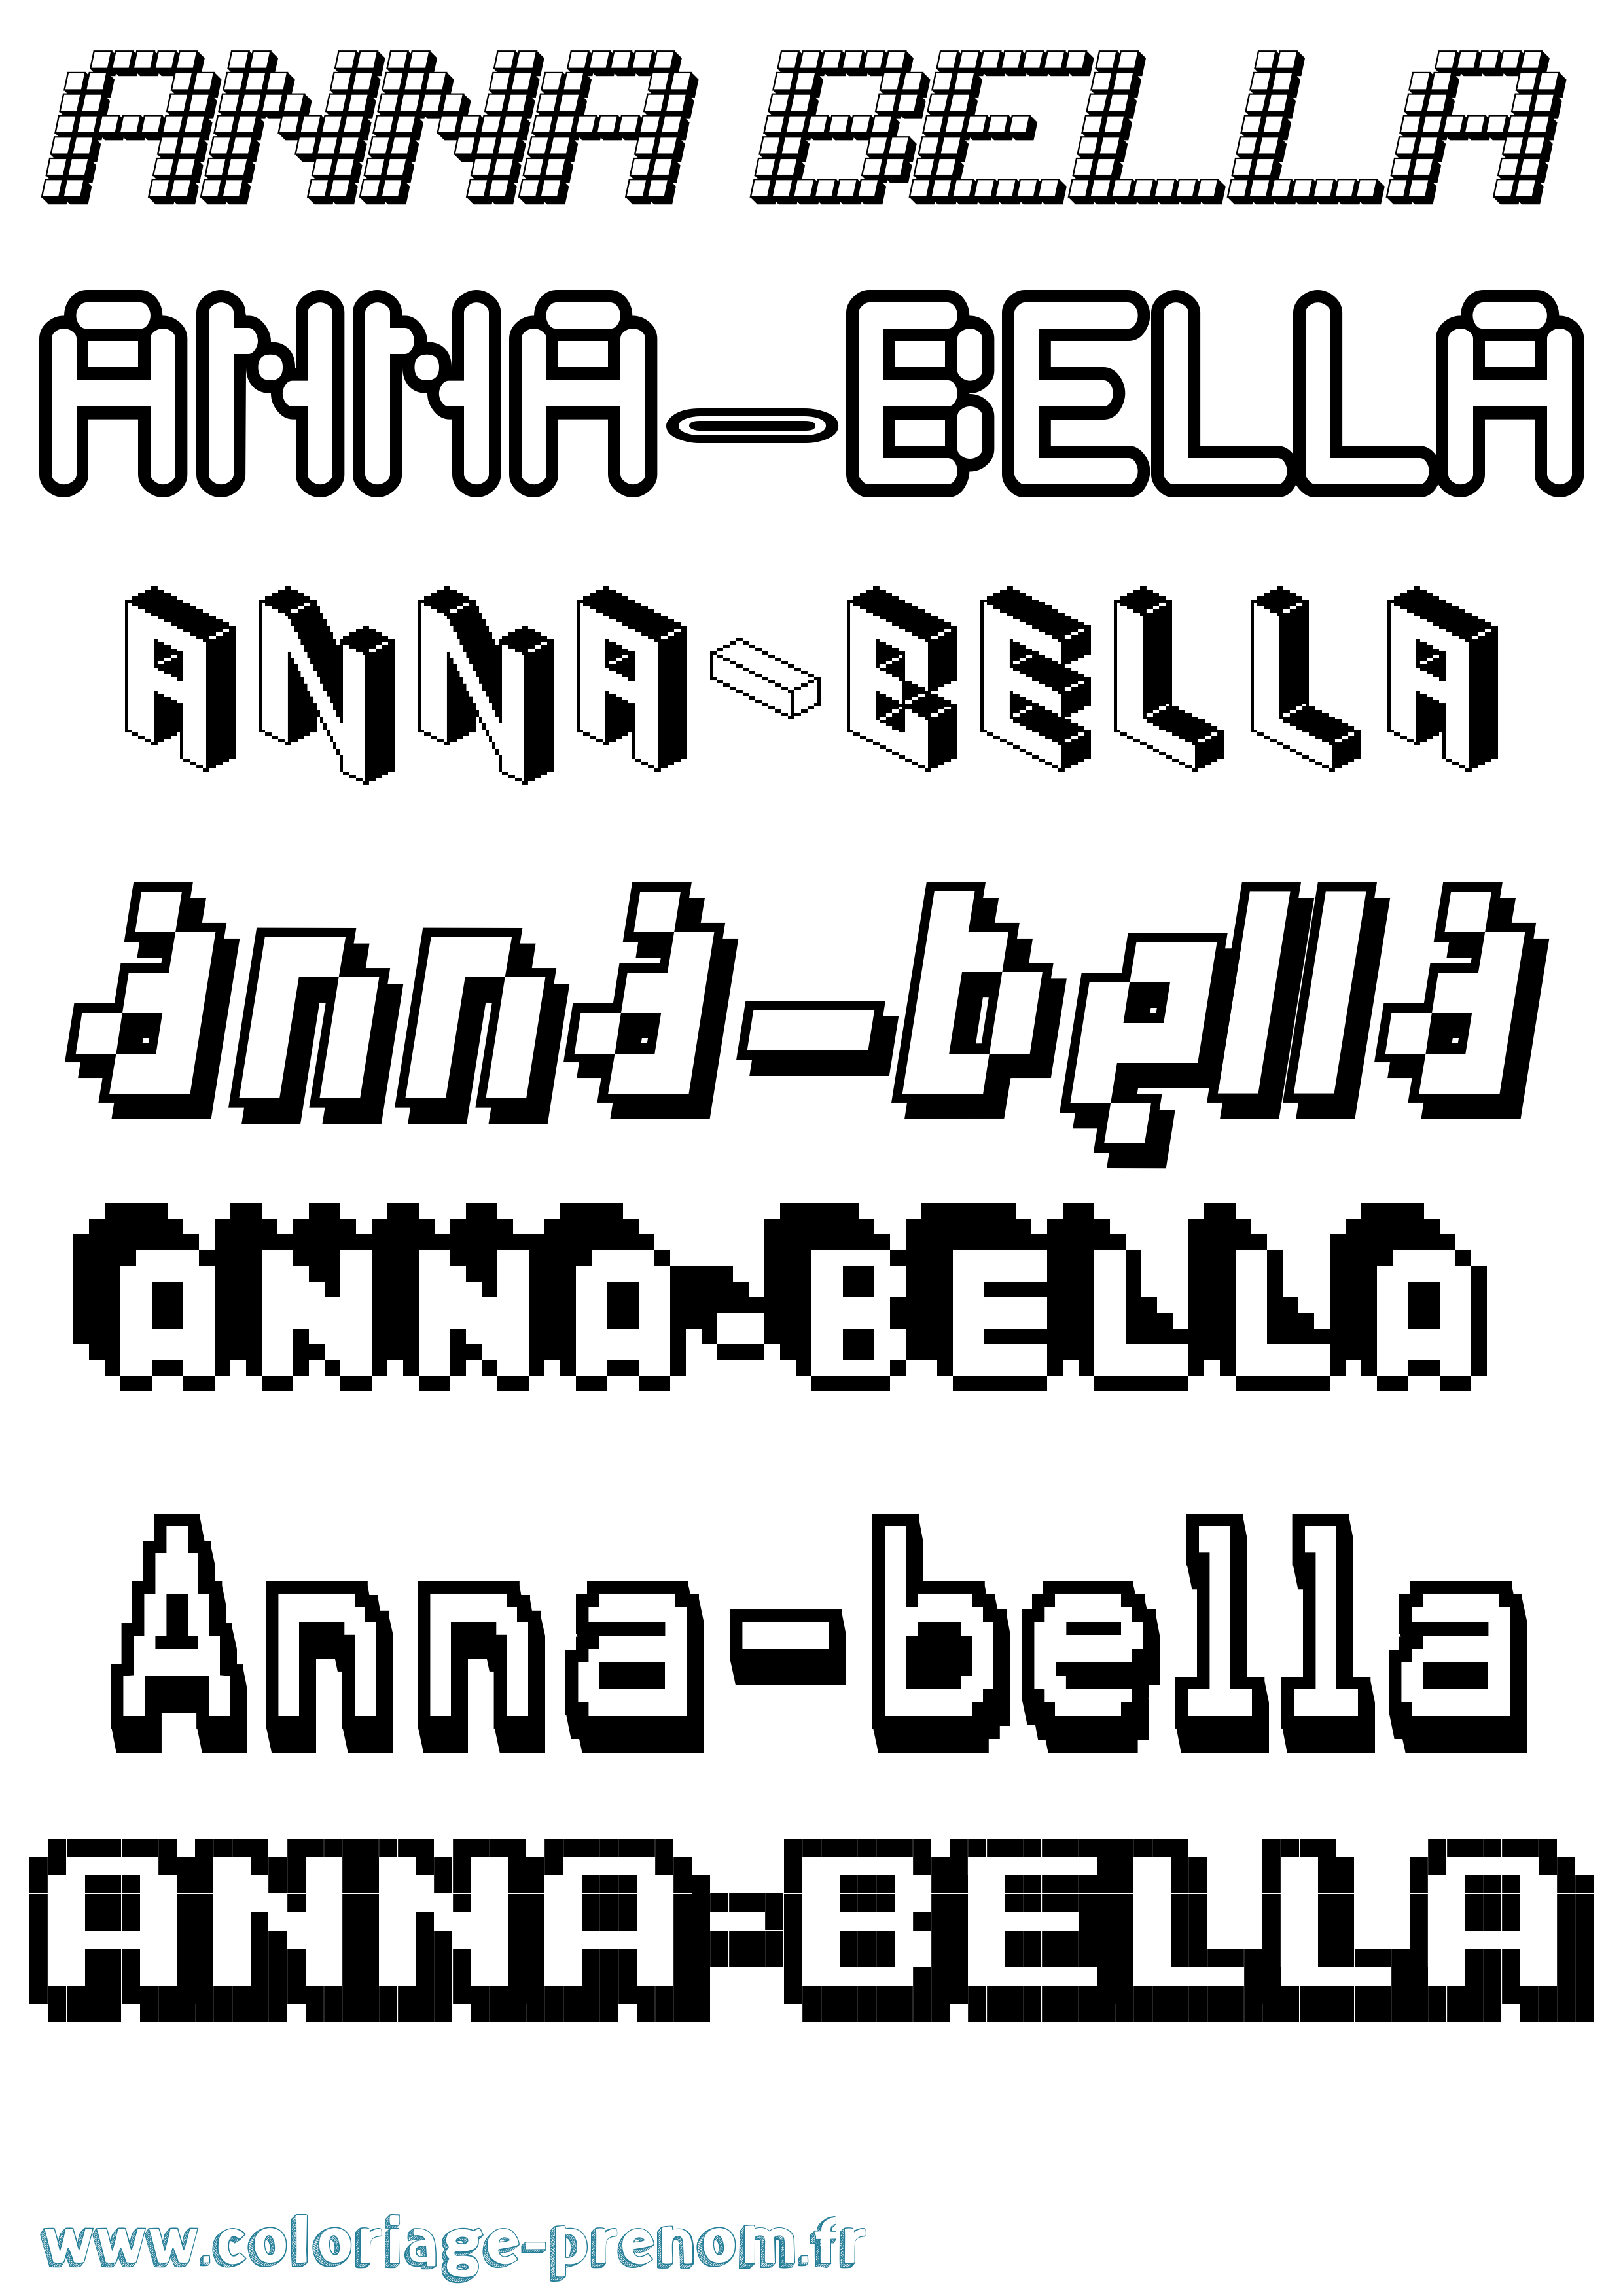 Coloriage prénom Anna-Bella Pixel